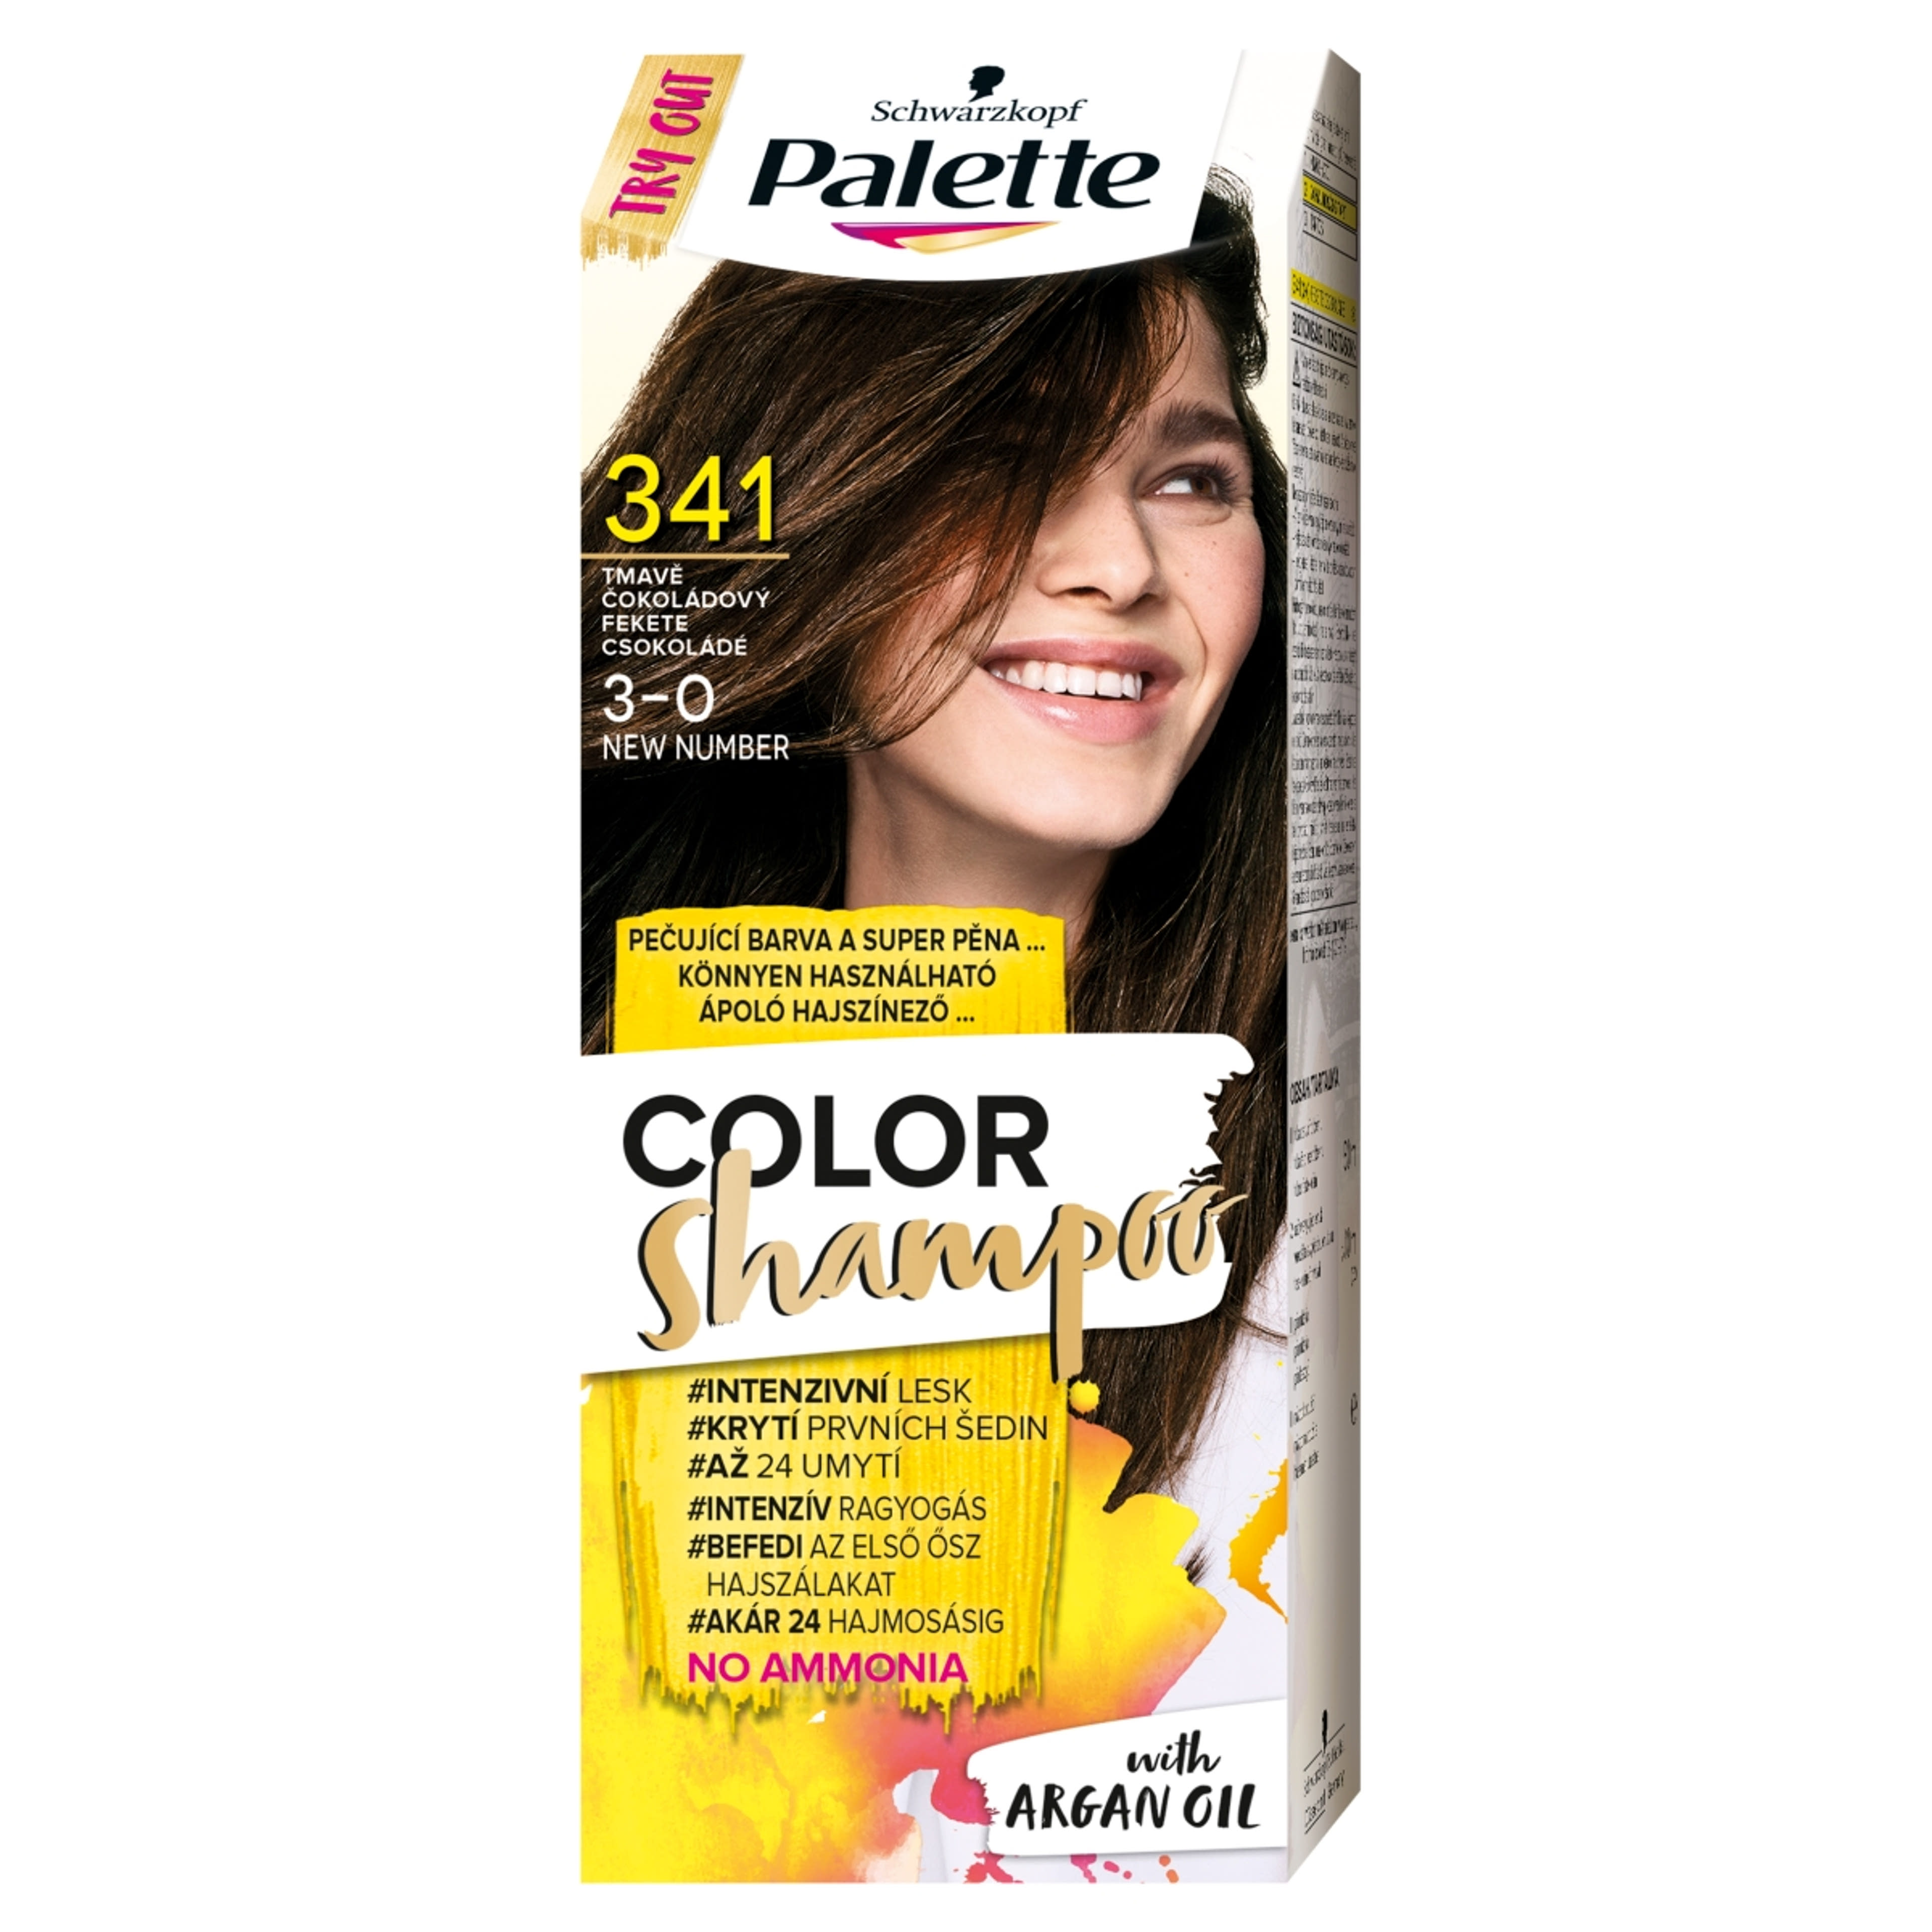 Schwarzkopf Palette Color Shampoo hajfesték 341 fekete csokoládé - 1 db